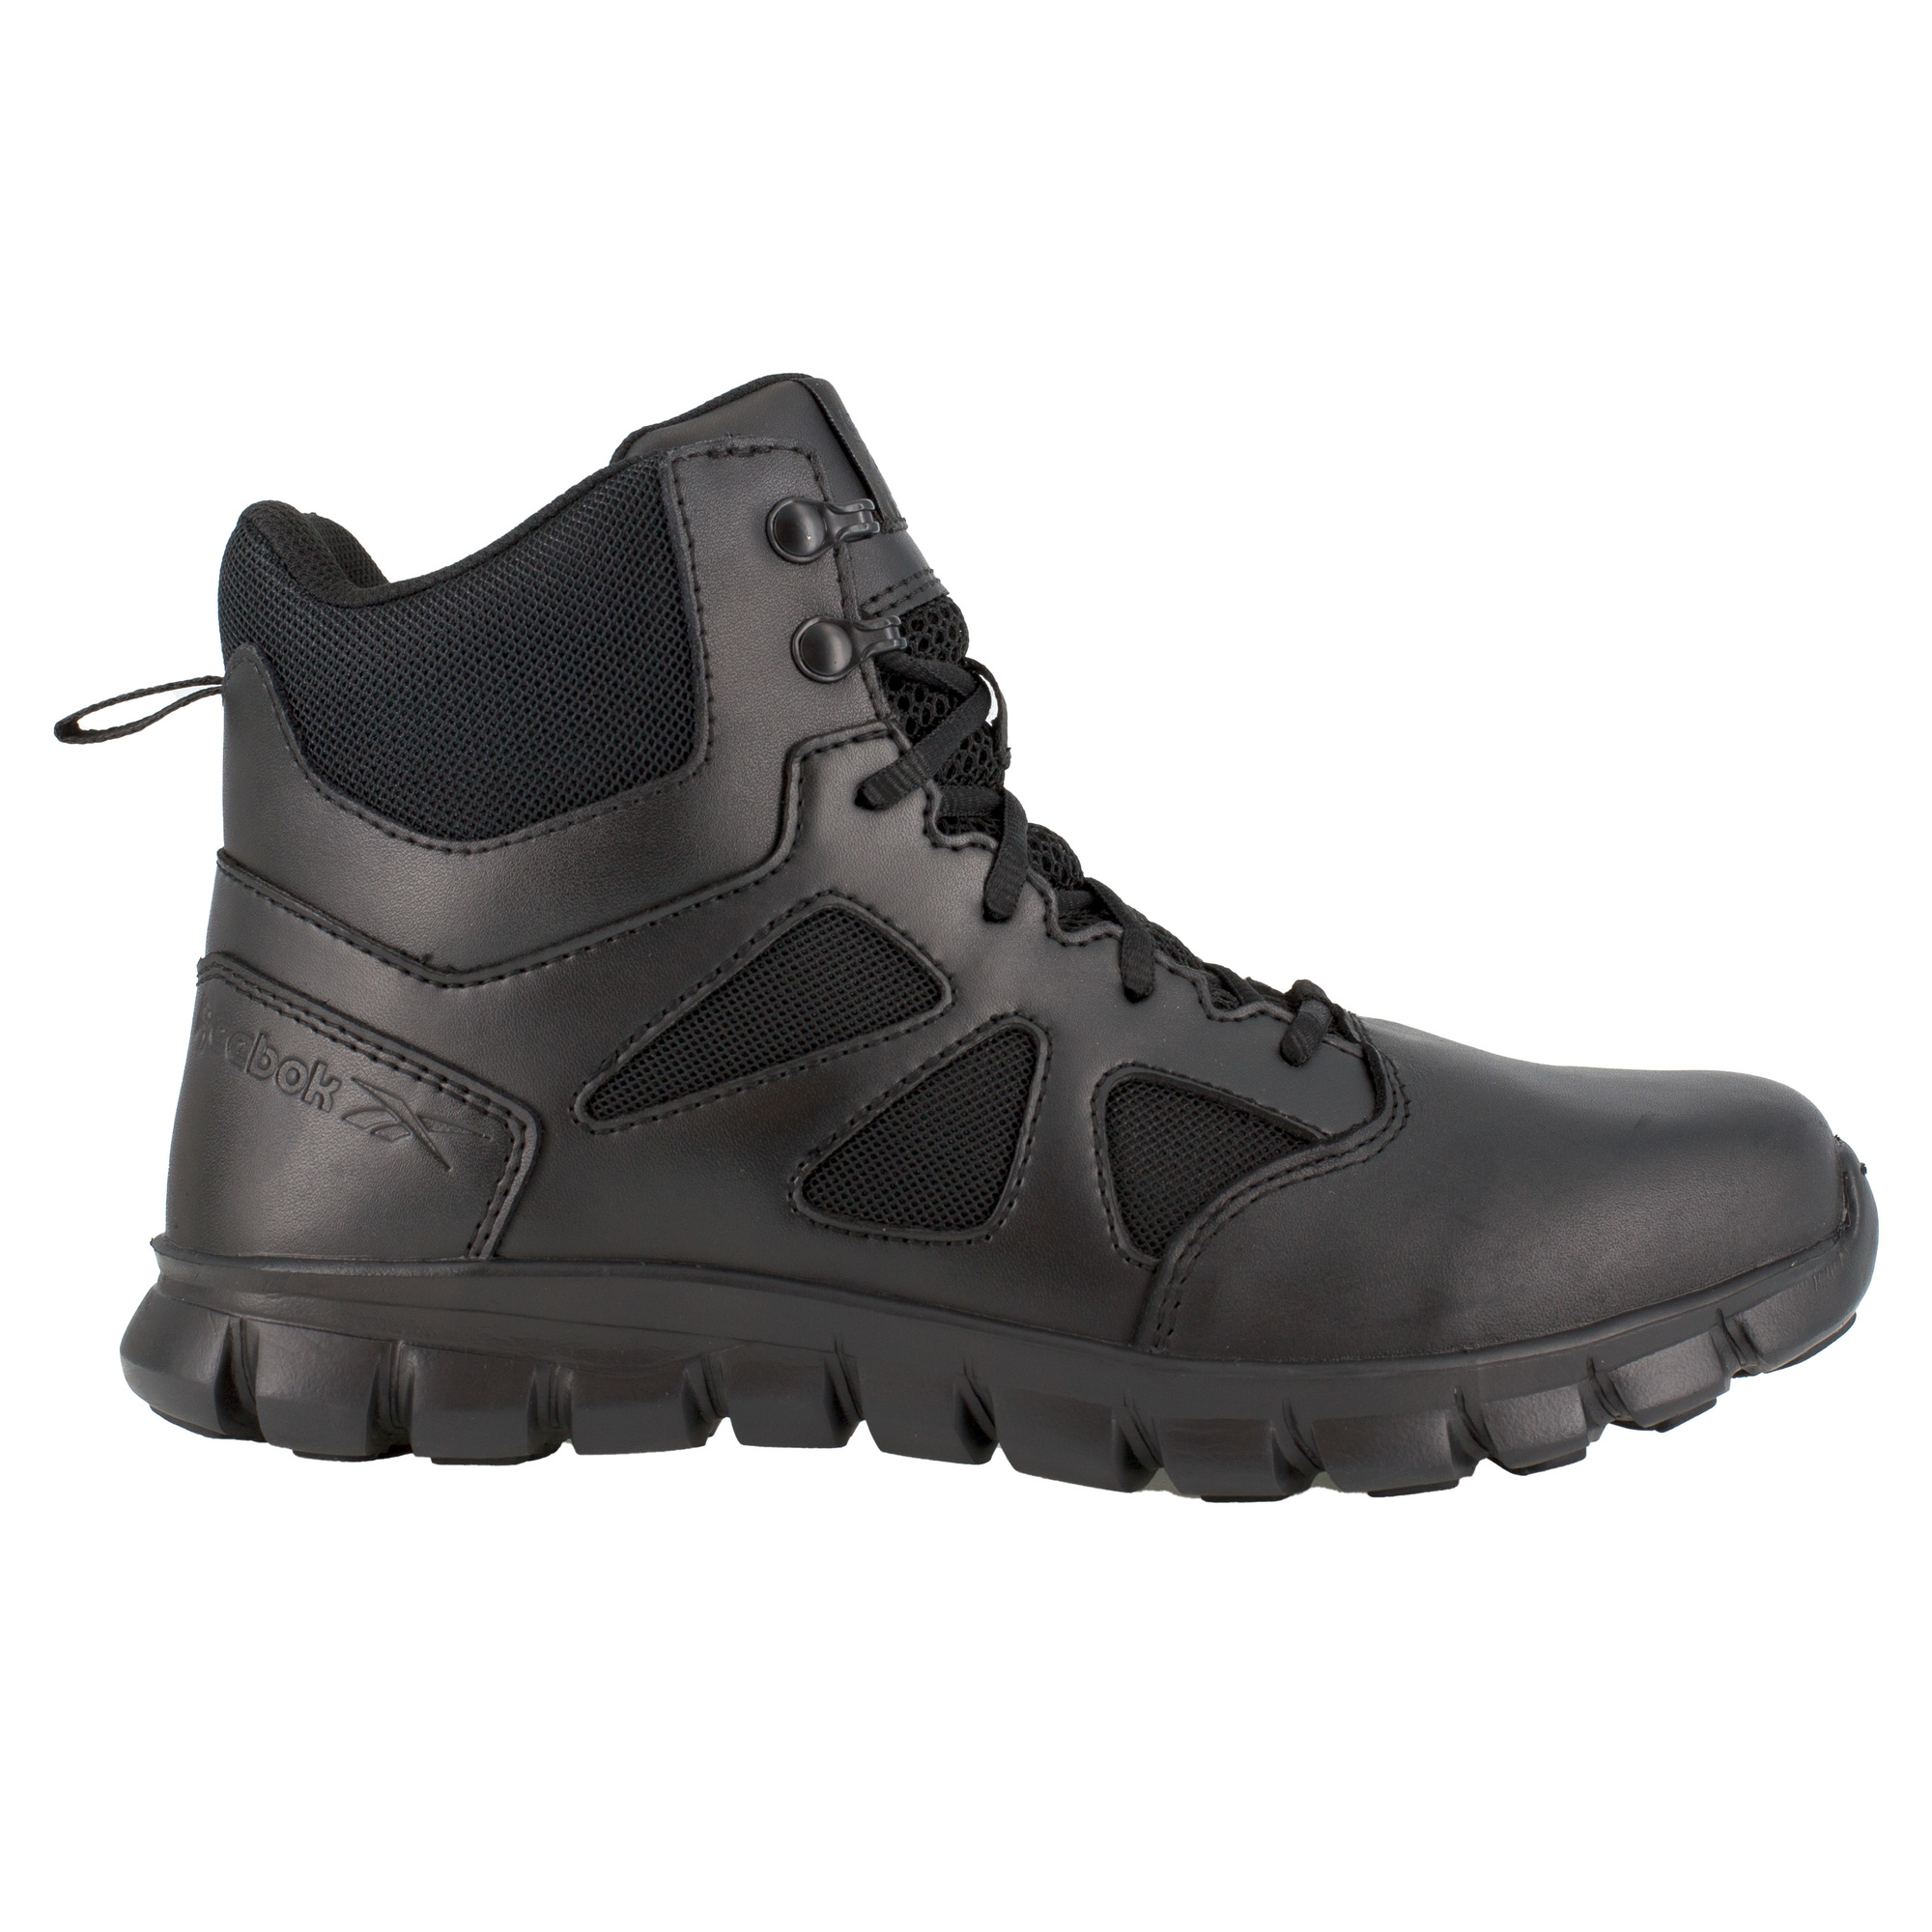 Reebok, 6Inch Tactical Boot w/Side Zipper, Size 11, Width Medium, Color Black, Model RB086